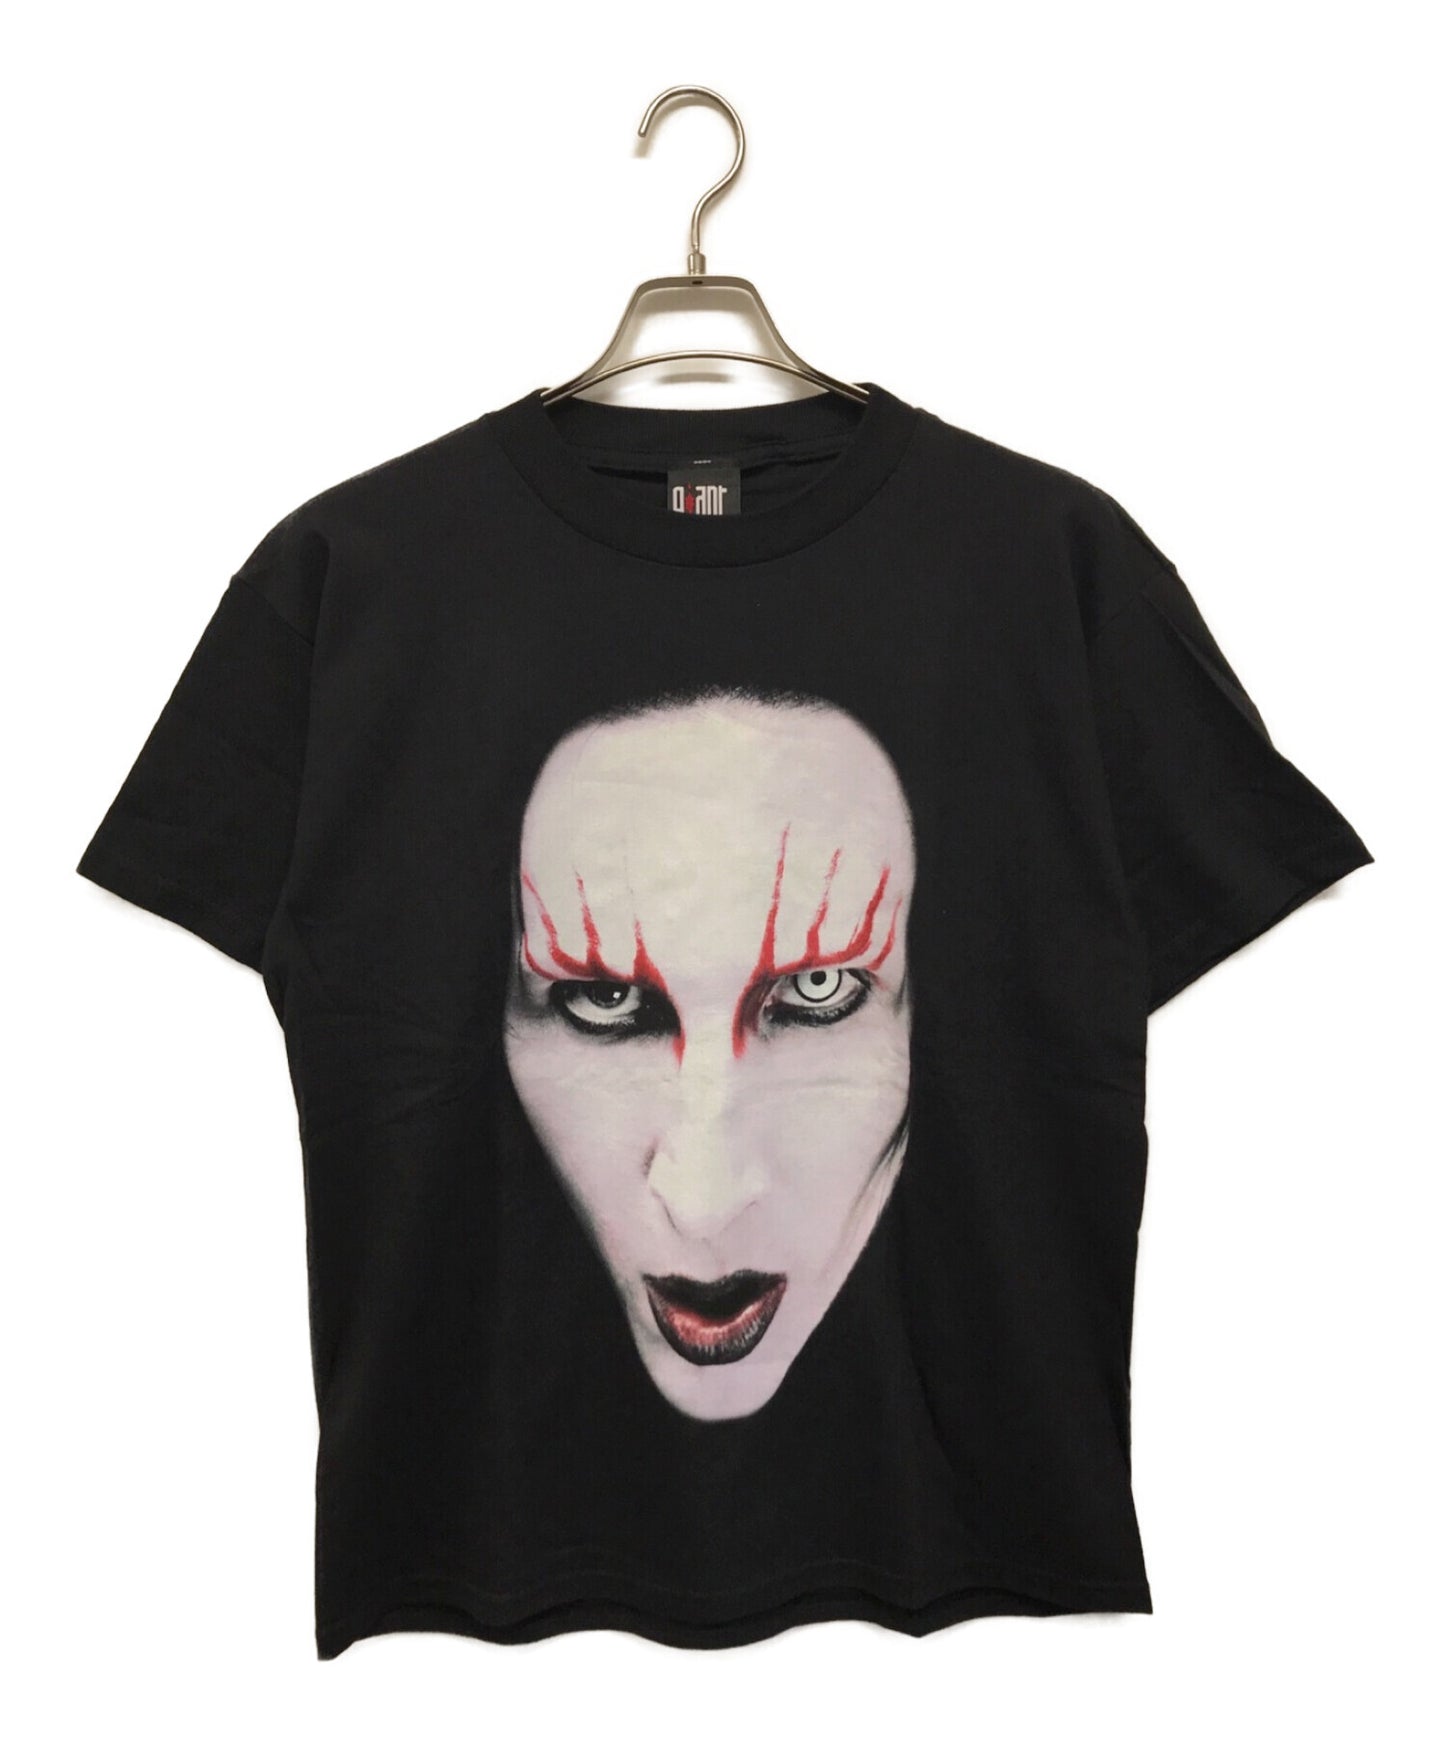 Marilyn Manson 2000 Band T-shirt